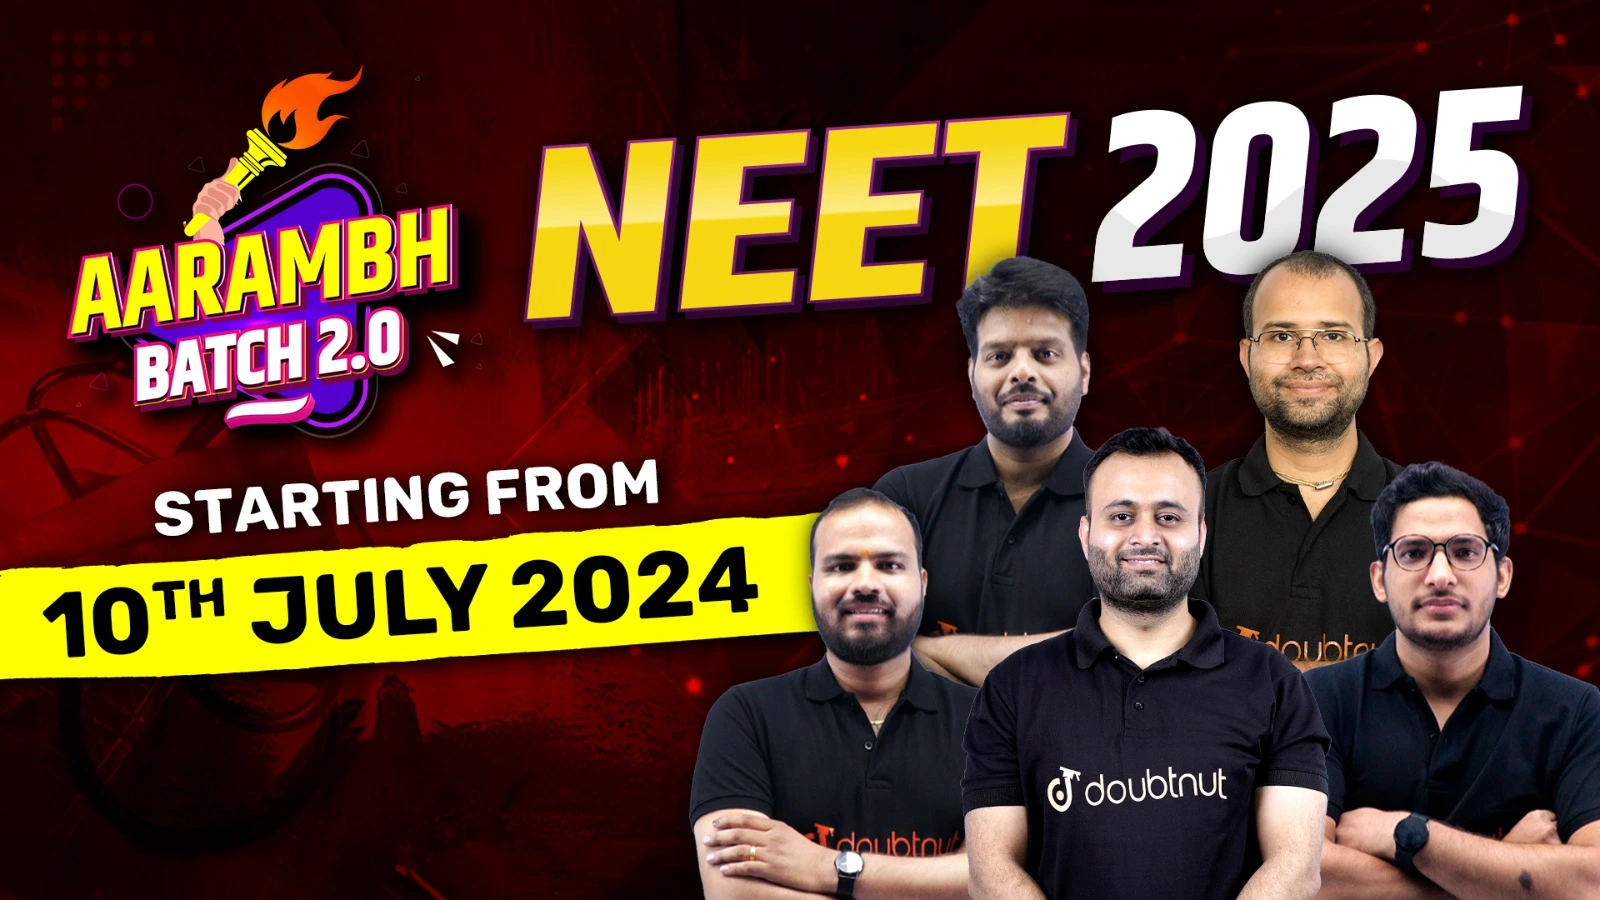 NEET 2025 | AARAMBH Batch 2.0